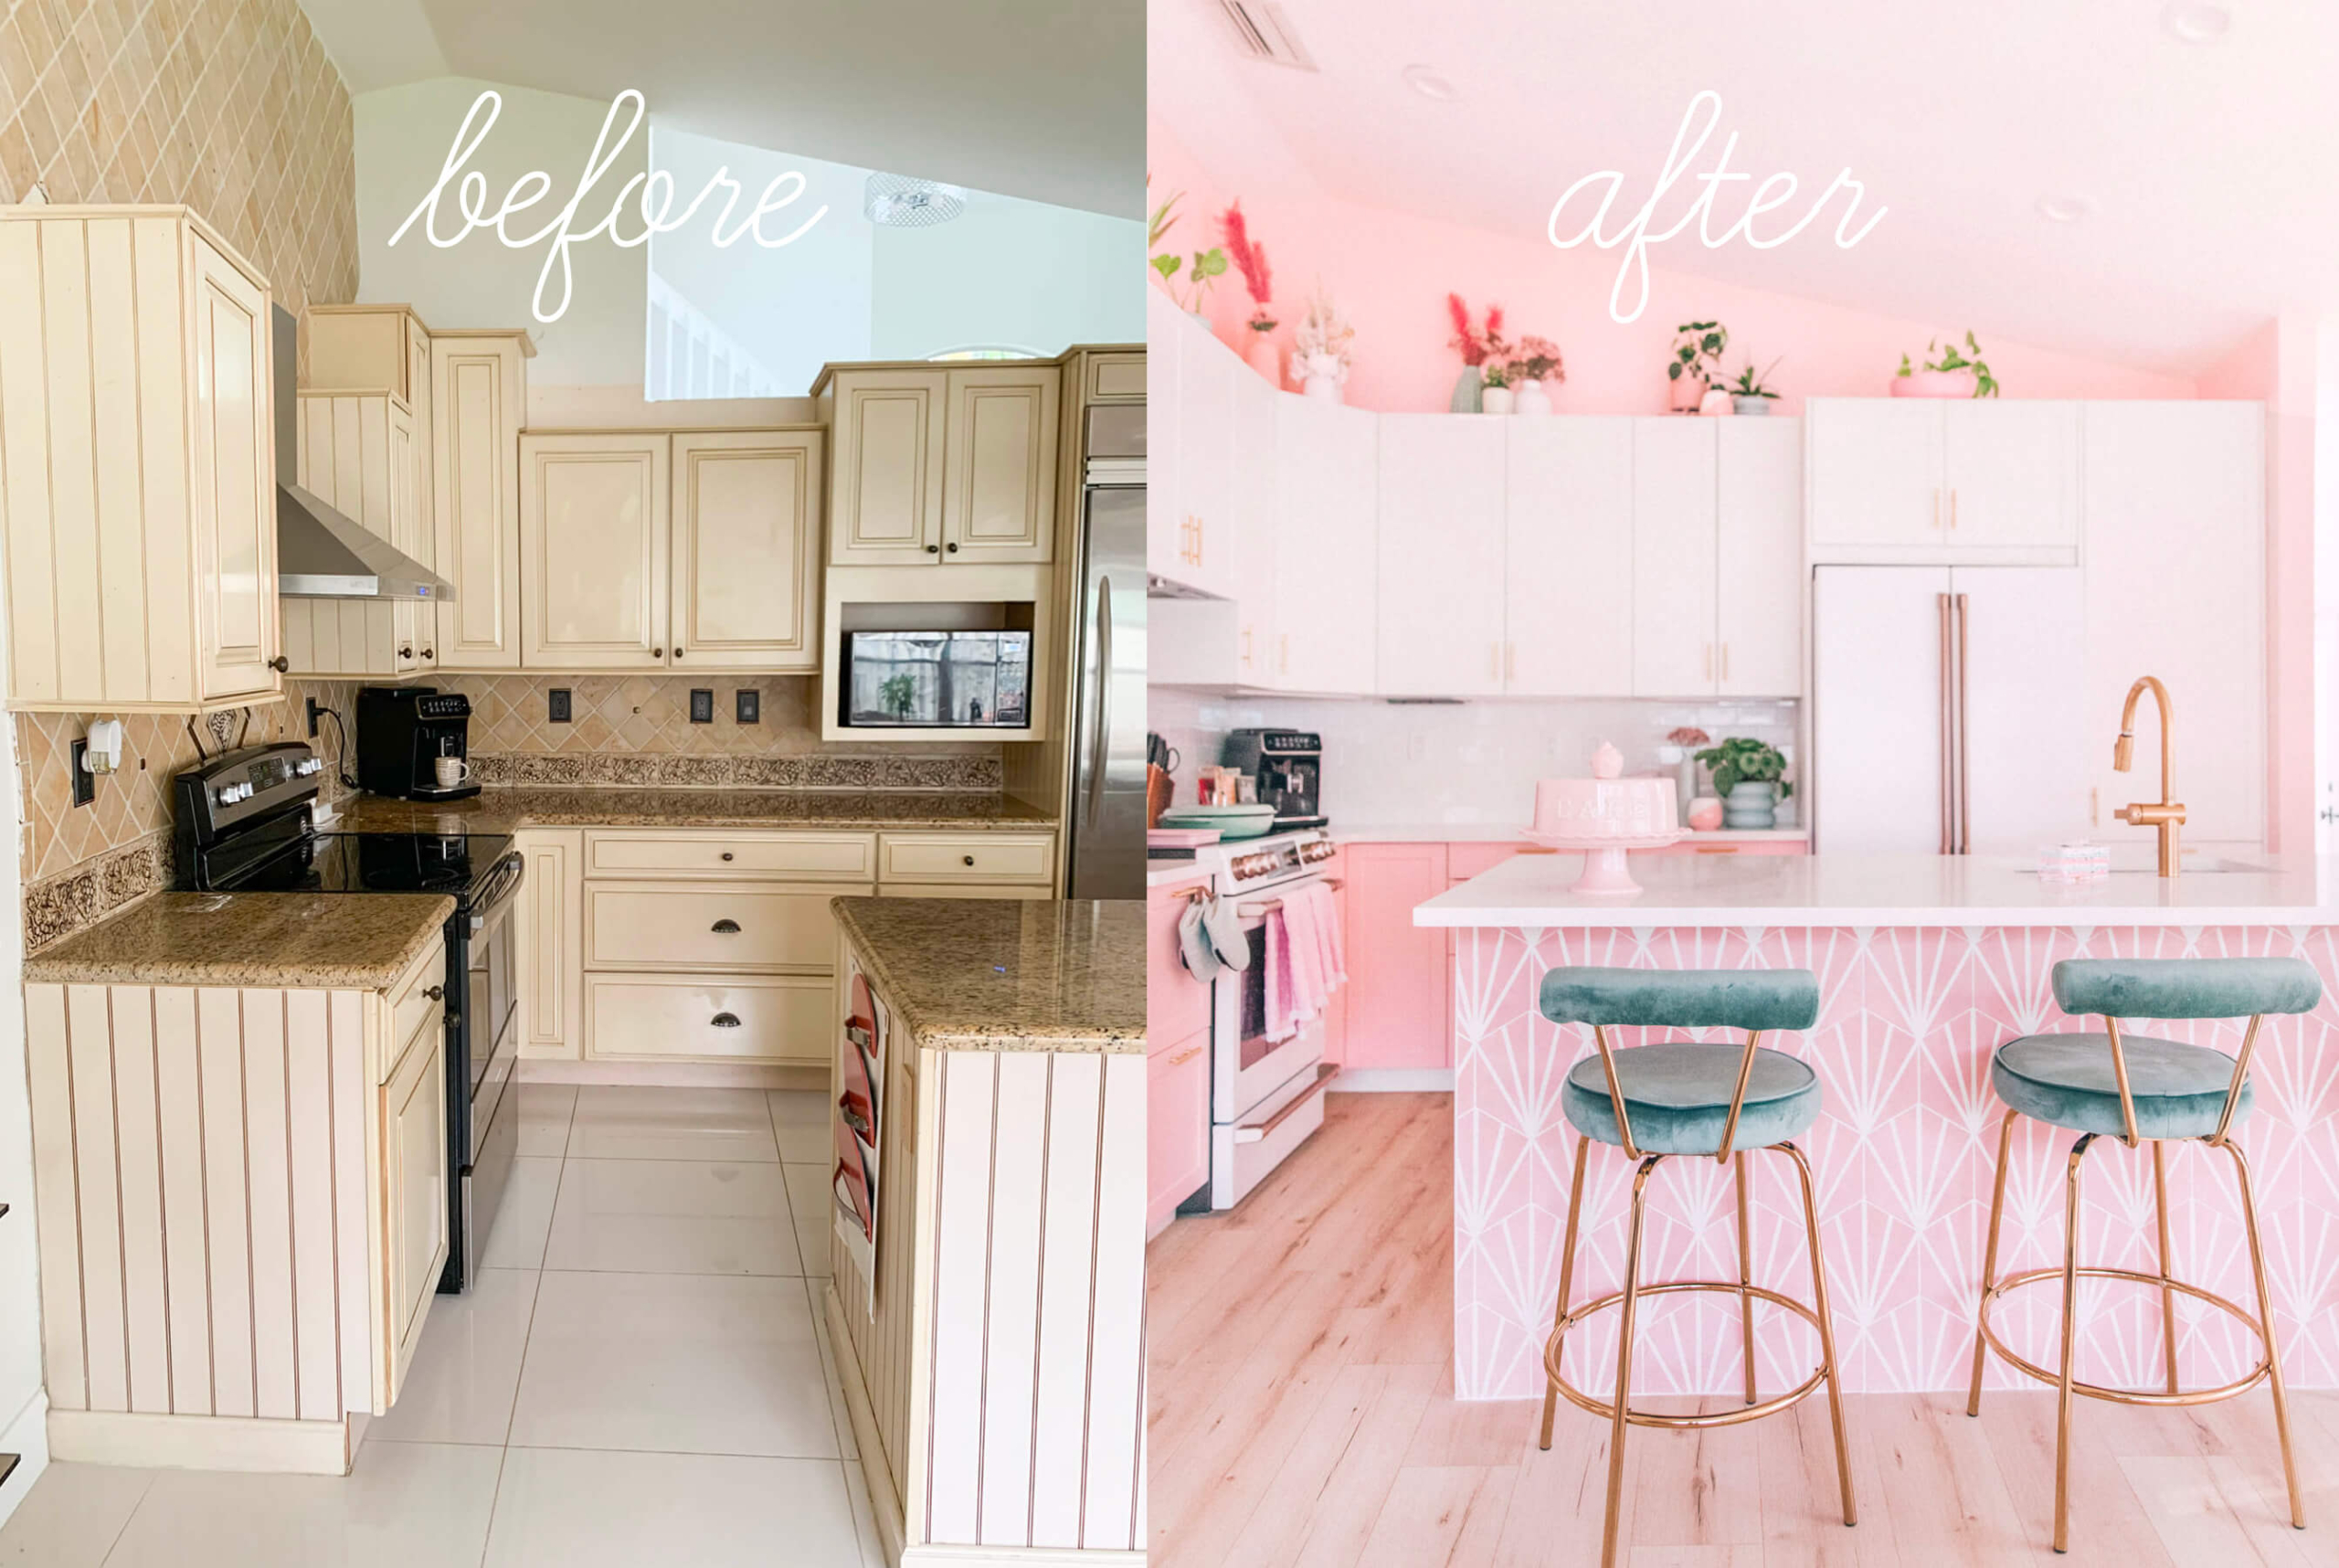 Studio DIY's Pink Kitchen Transformation Seriously Wows